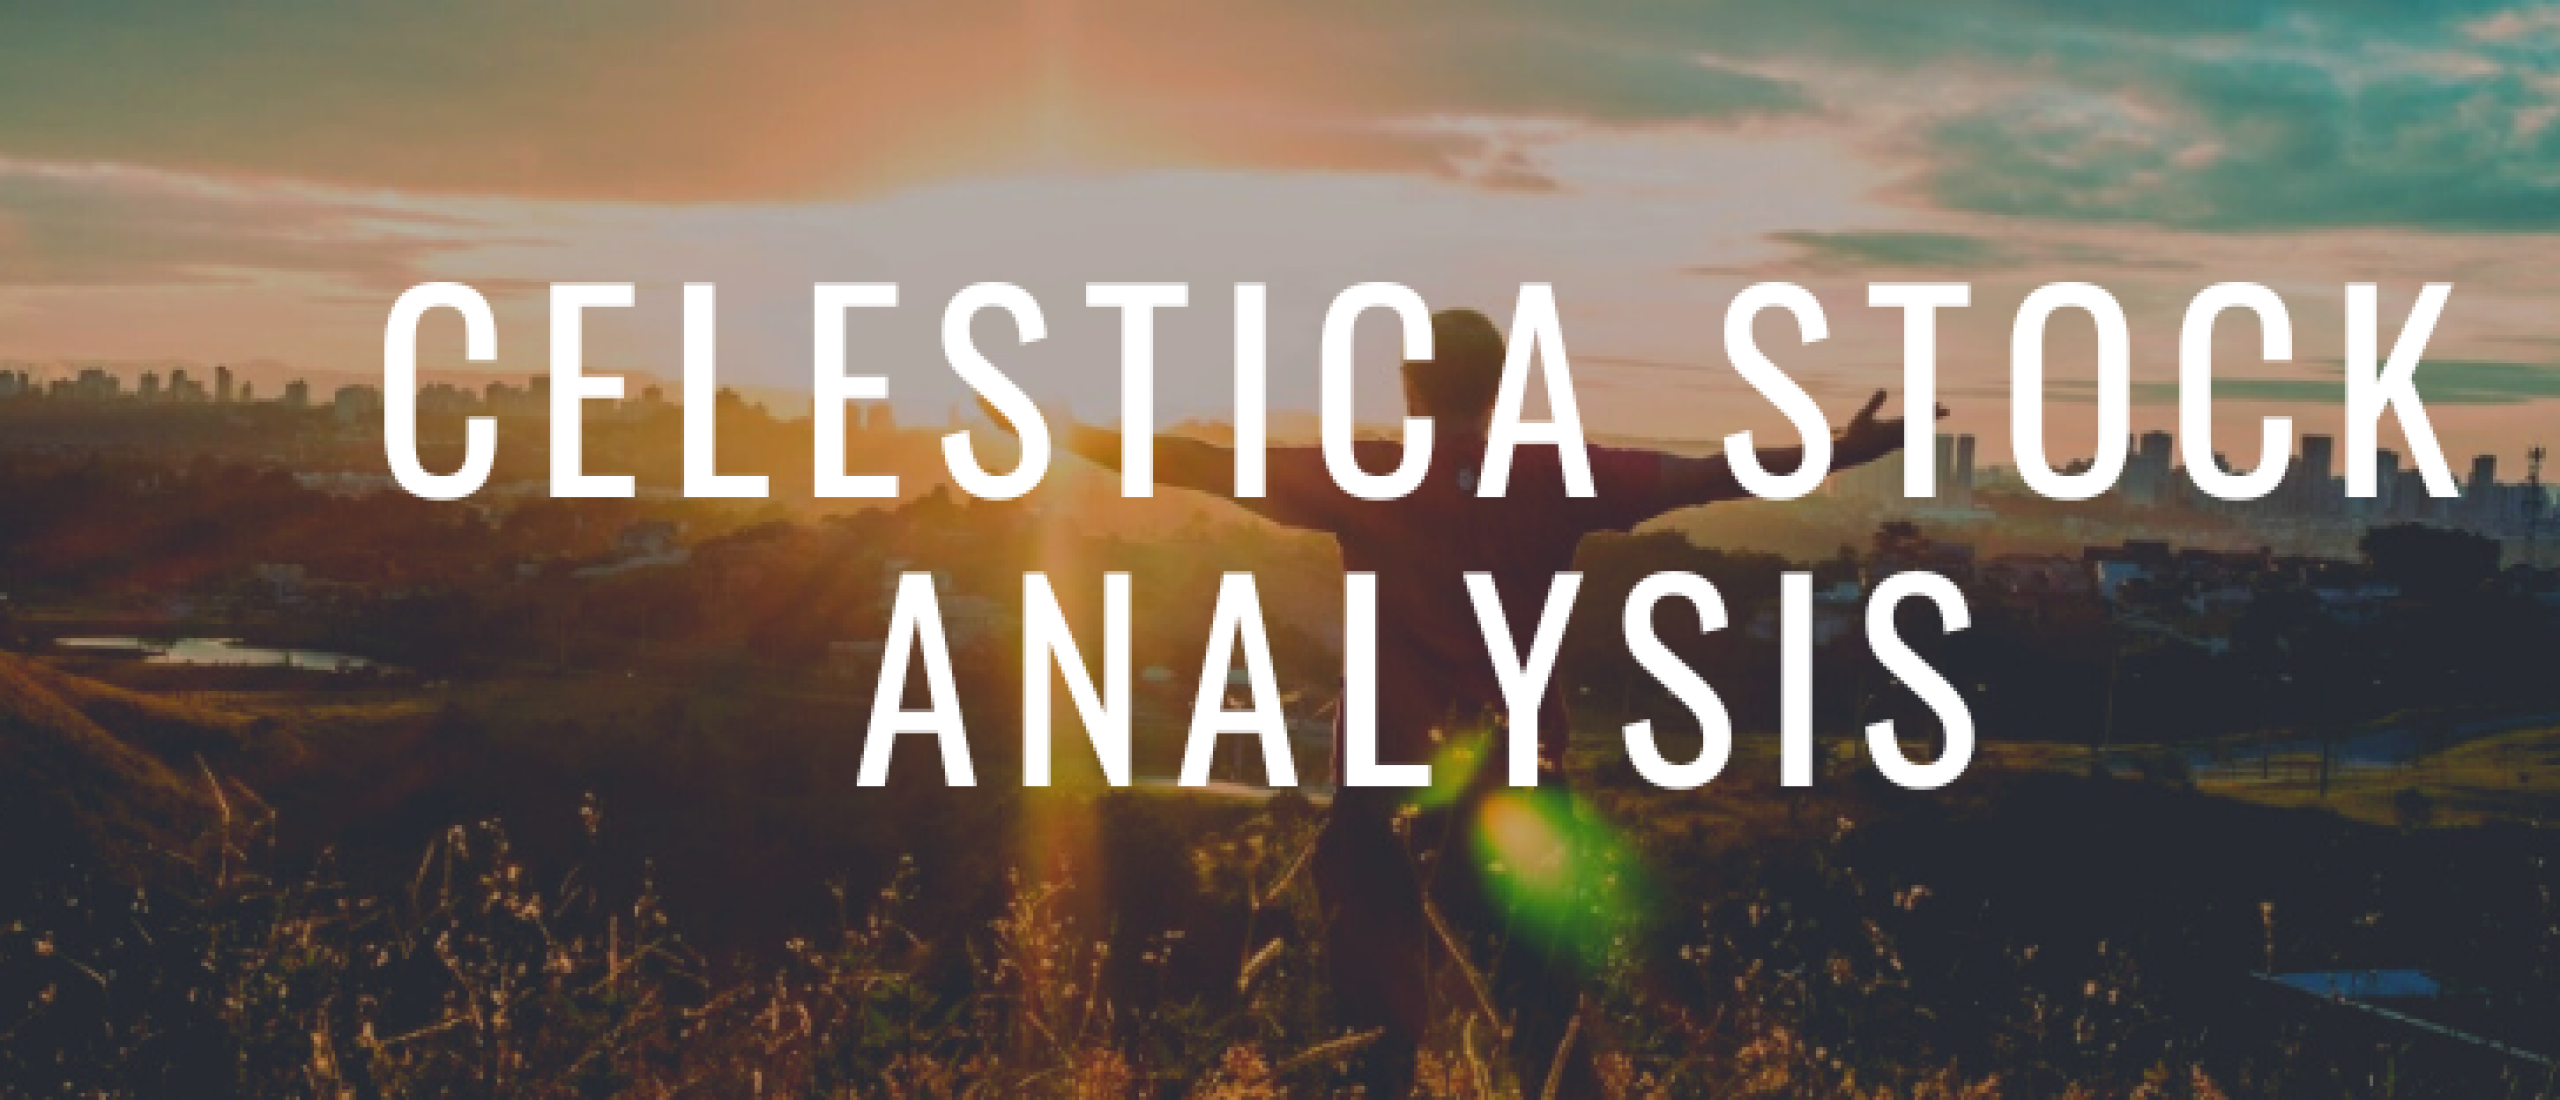 Celestica Stock Buy or Not? Celestica Stock Analysis for Value Investors